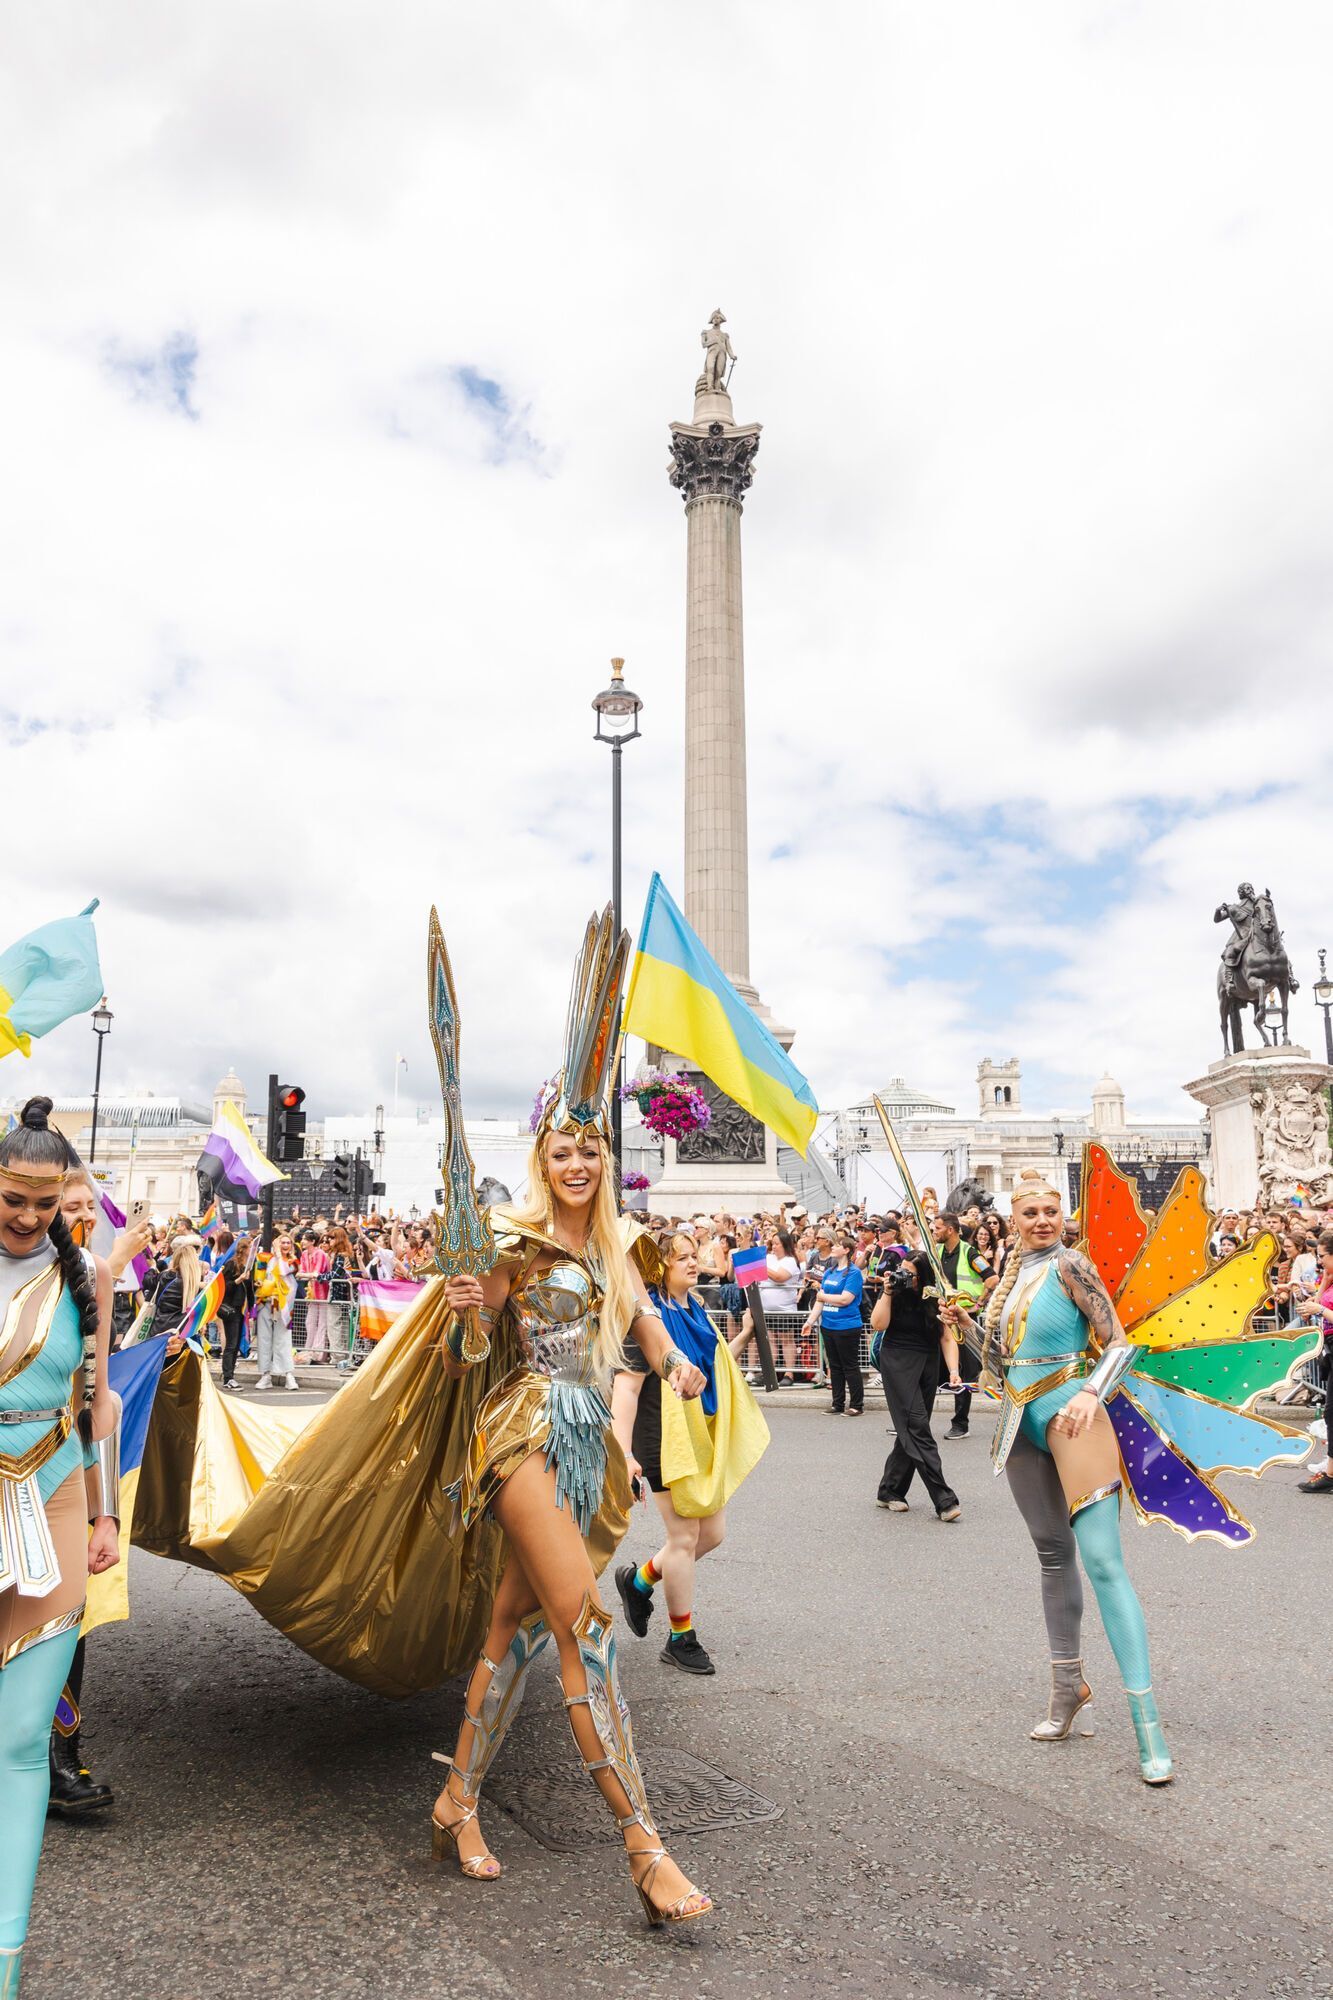 Оля Полякова в образі "Незламної" очолила українську колону Прайду в Лондоні